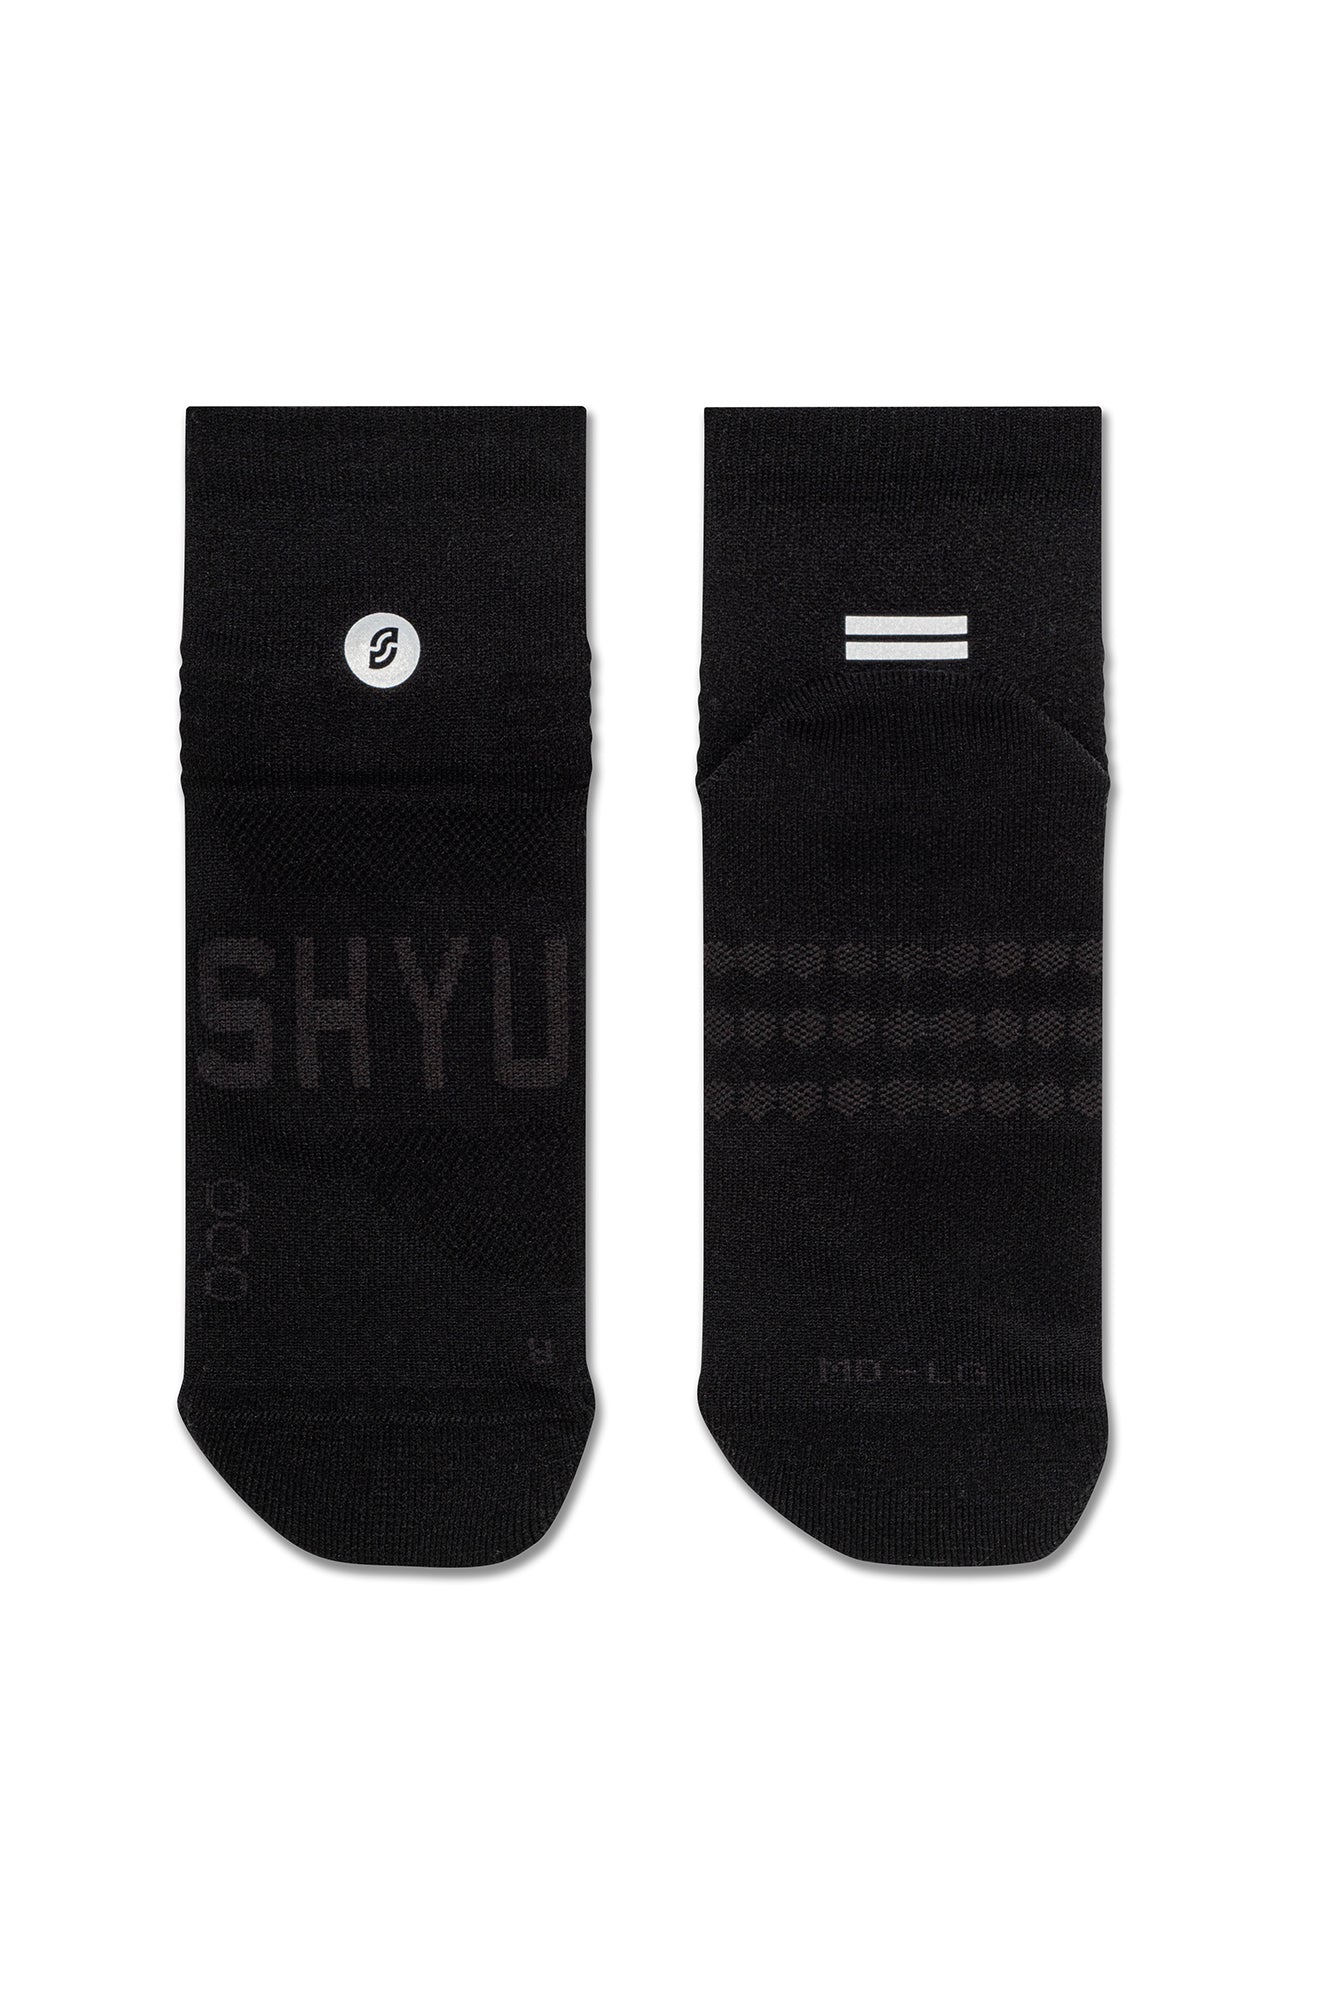 SHYU racing socks - black | black | black